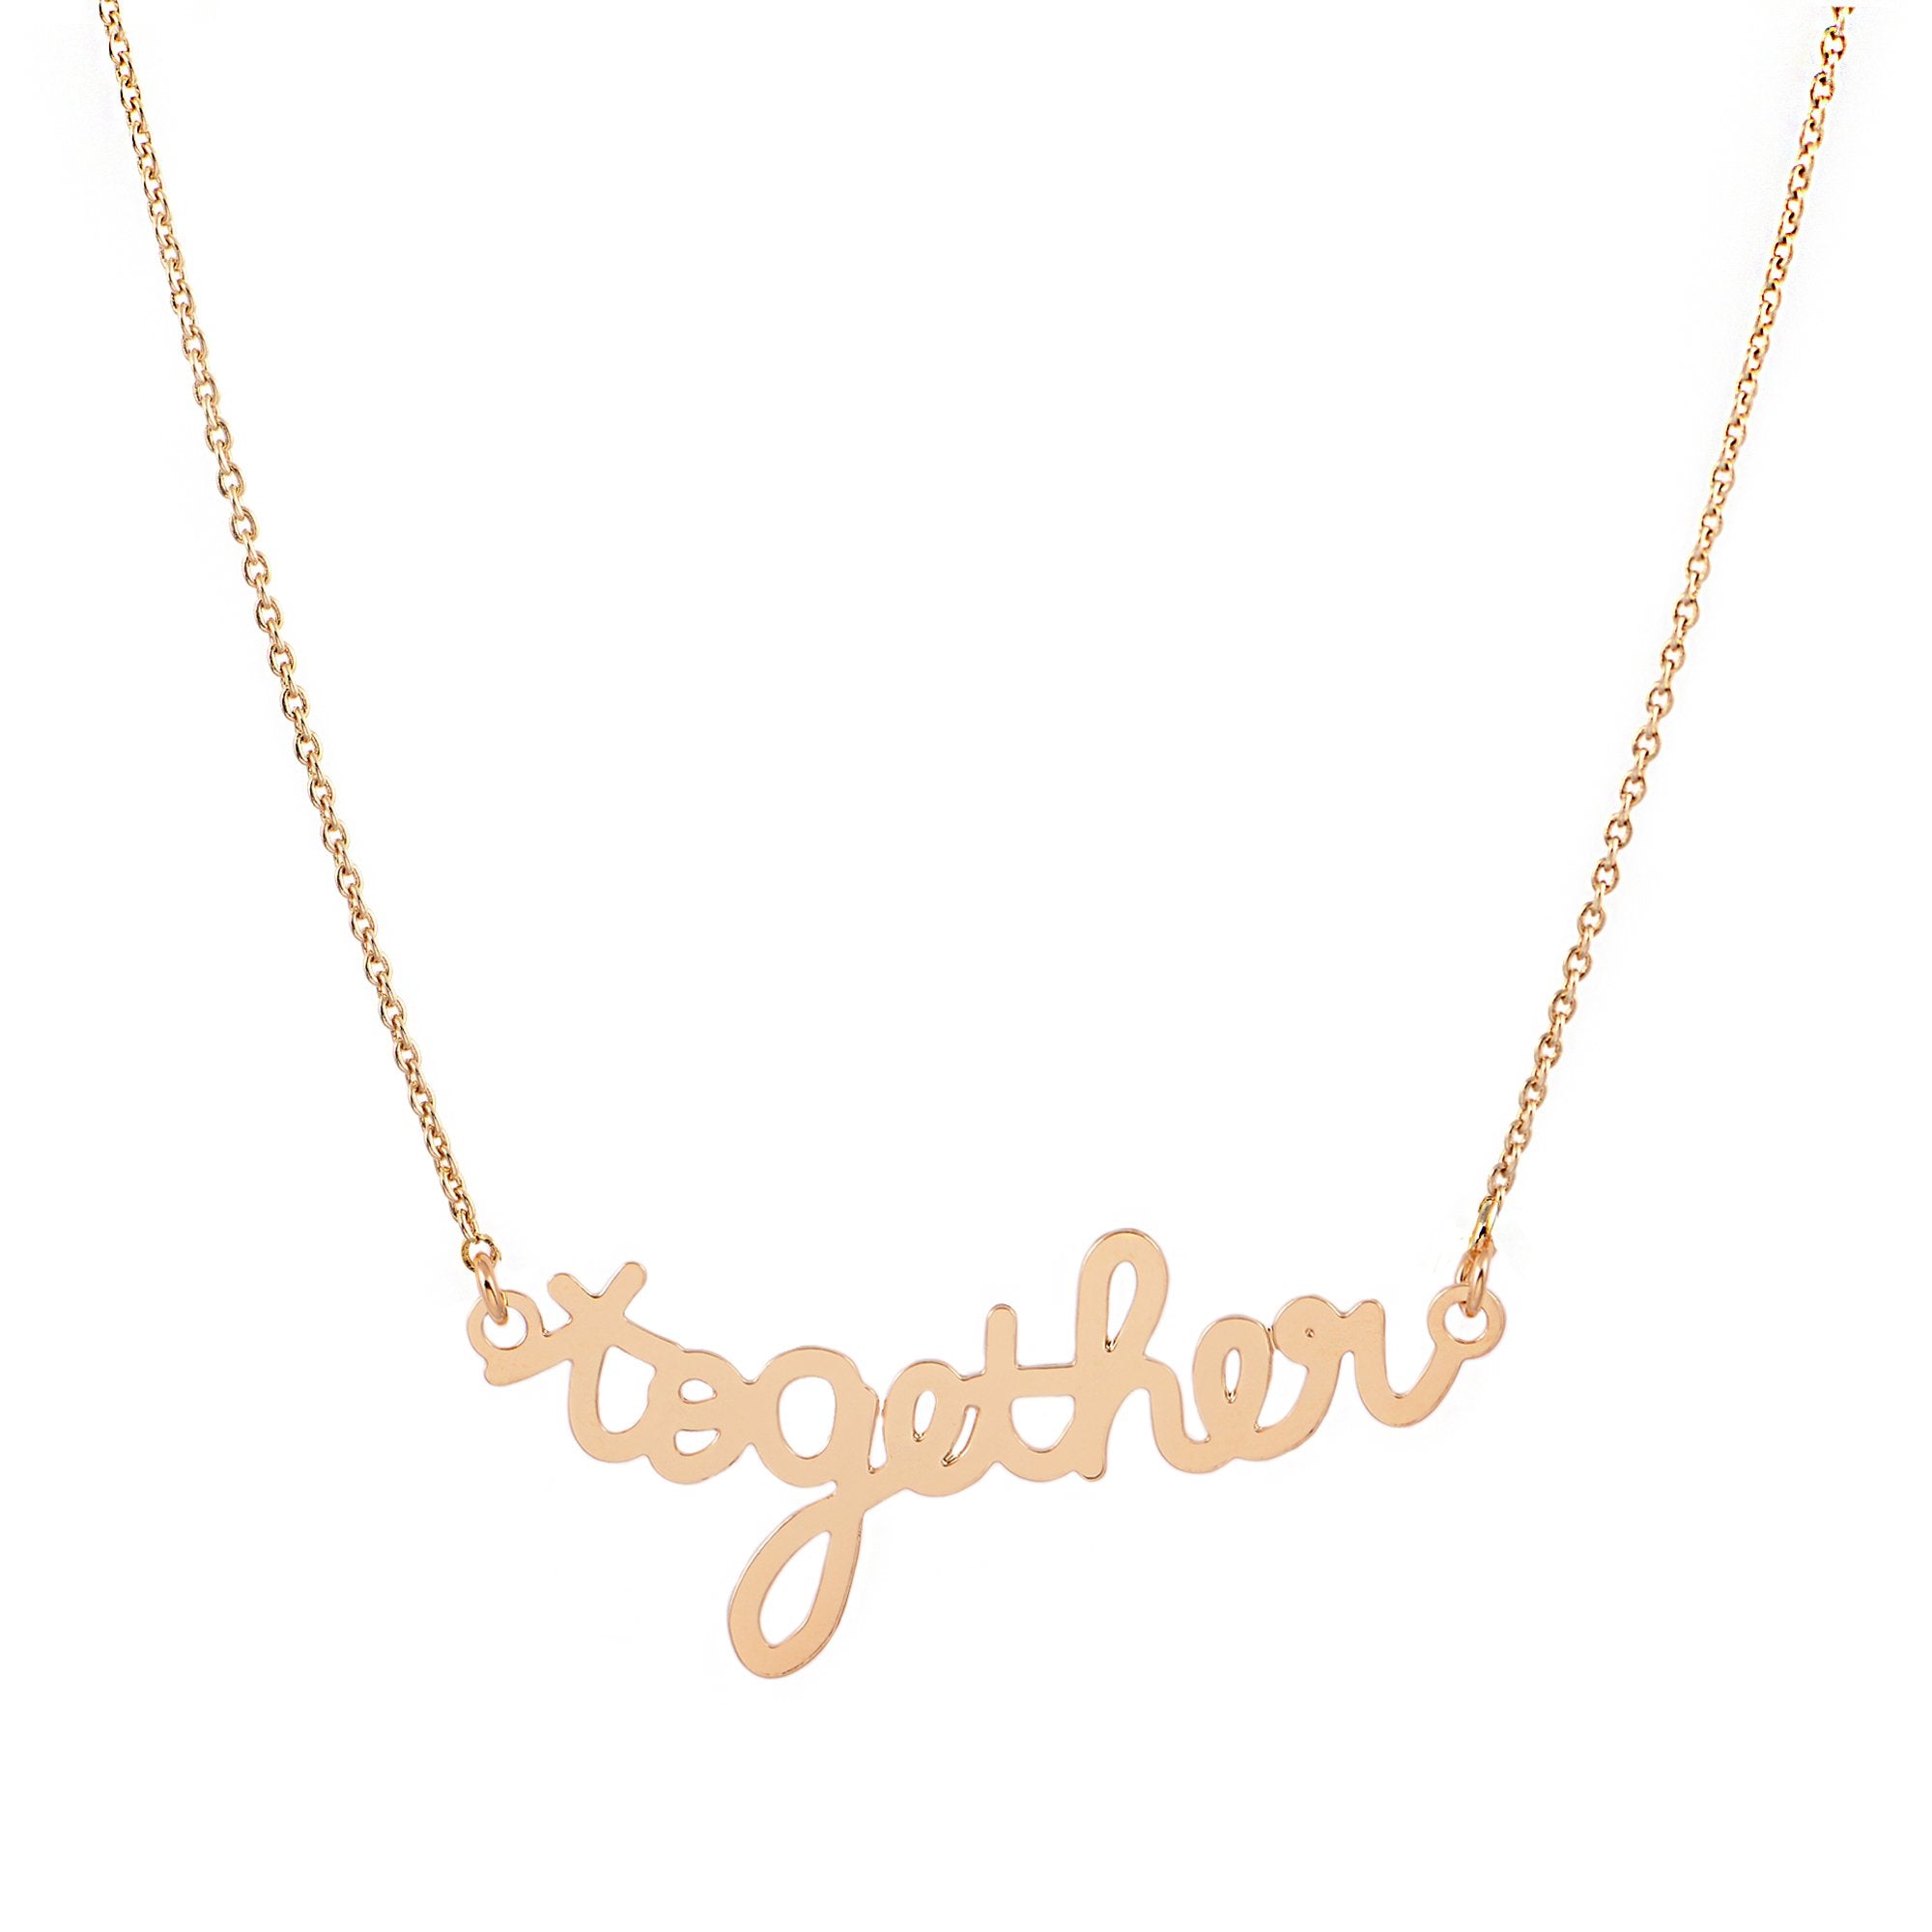 Together necklace